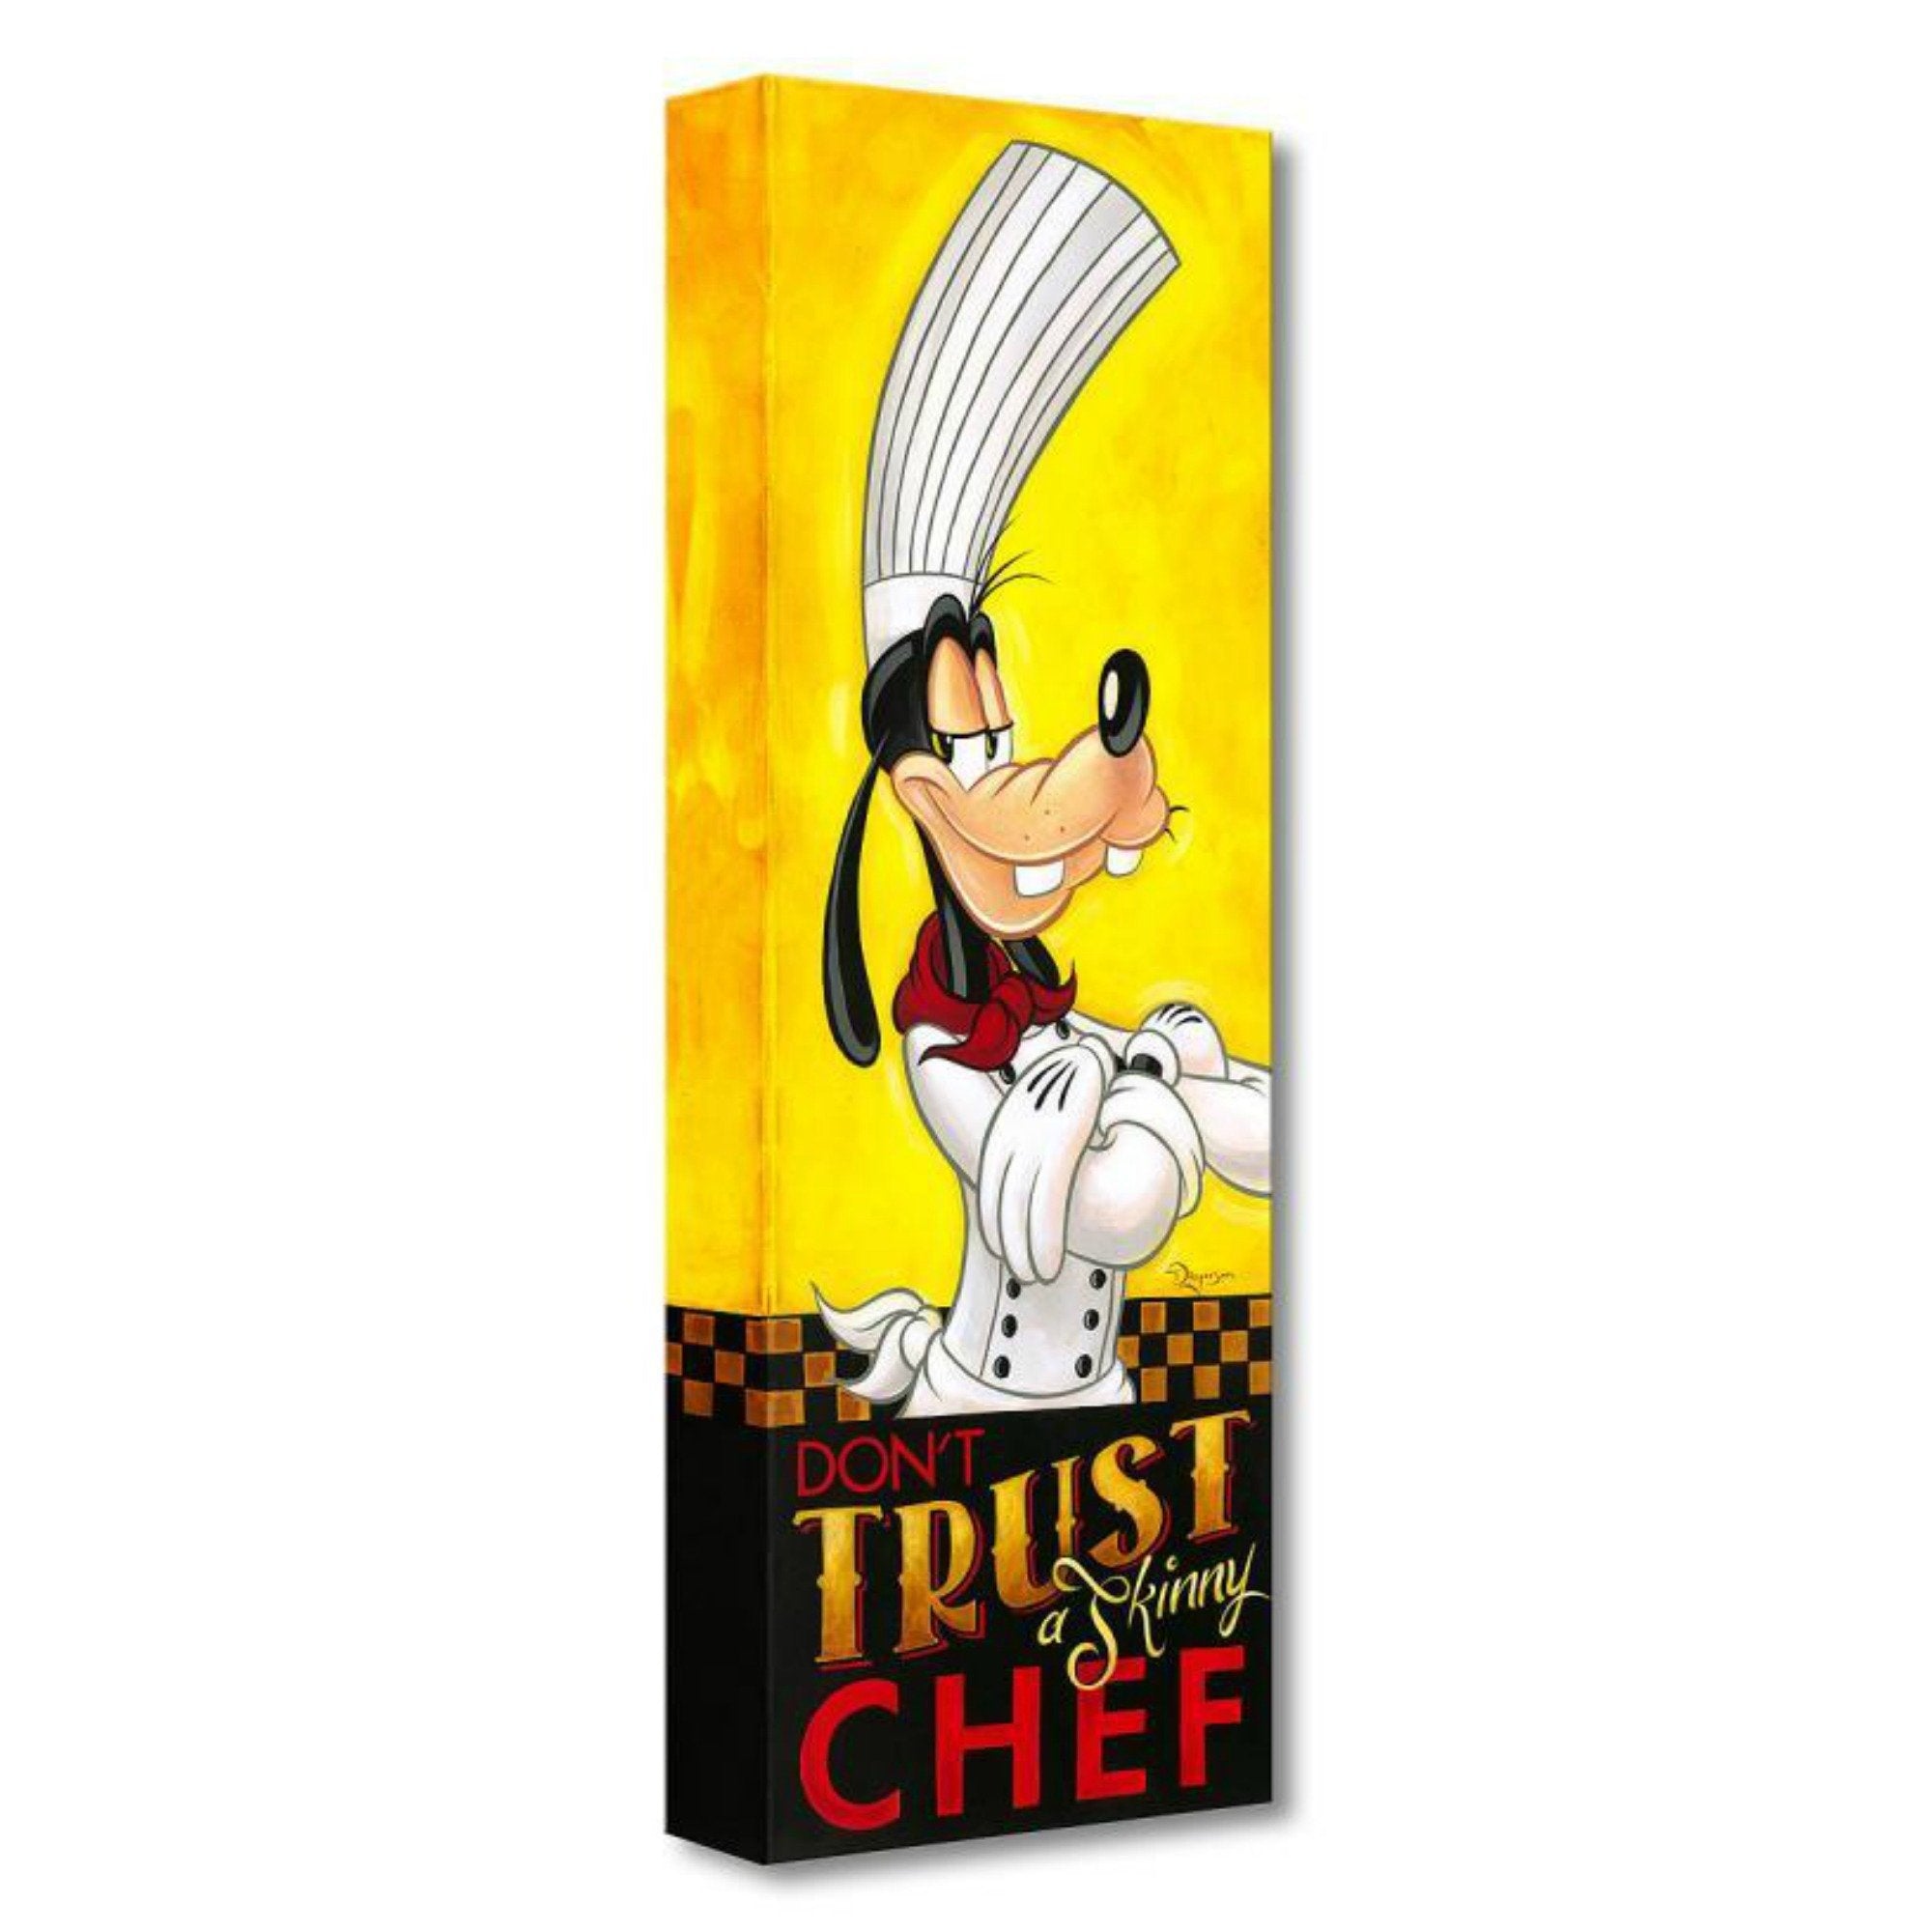 Don't Trust A Skinny Chef by Tim Rogerson  Chef Goofy smirky posing in a billboard  "TRUST A SKINNY CHEF."